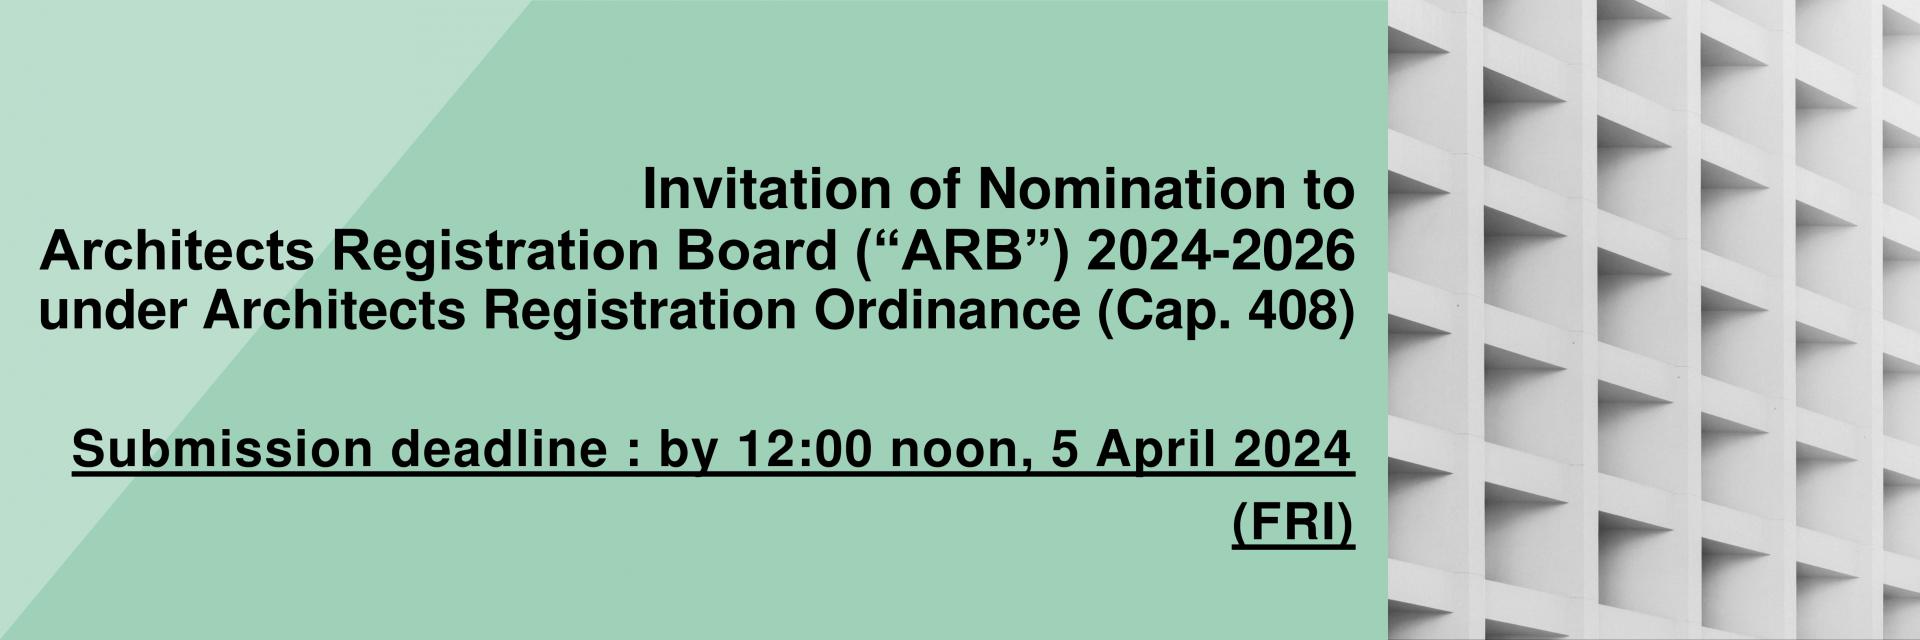 Invitation of Nomination to the Architects Registration Board (“ARB”) 2024-2026 under the Architects Registration Ordinance (Cap. 408) (“ARO”)